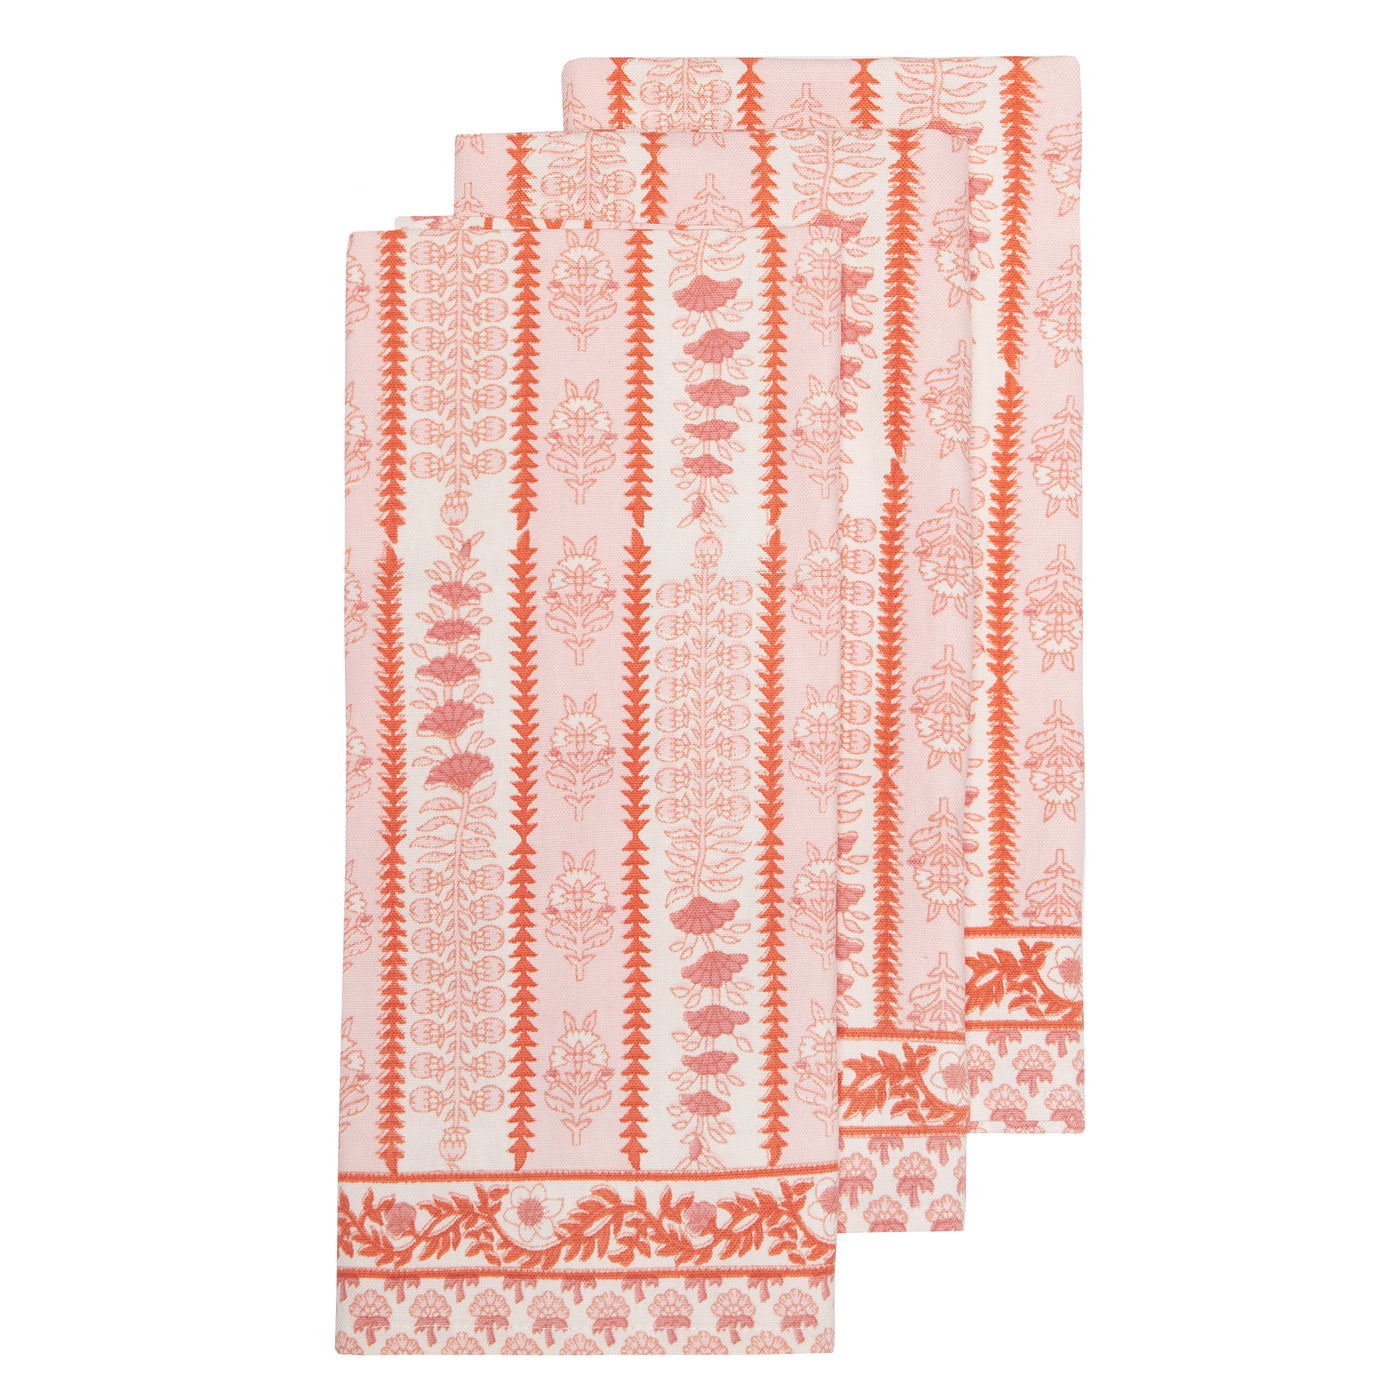 Avignon Tea Towels Pink City, Set of 3